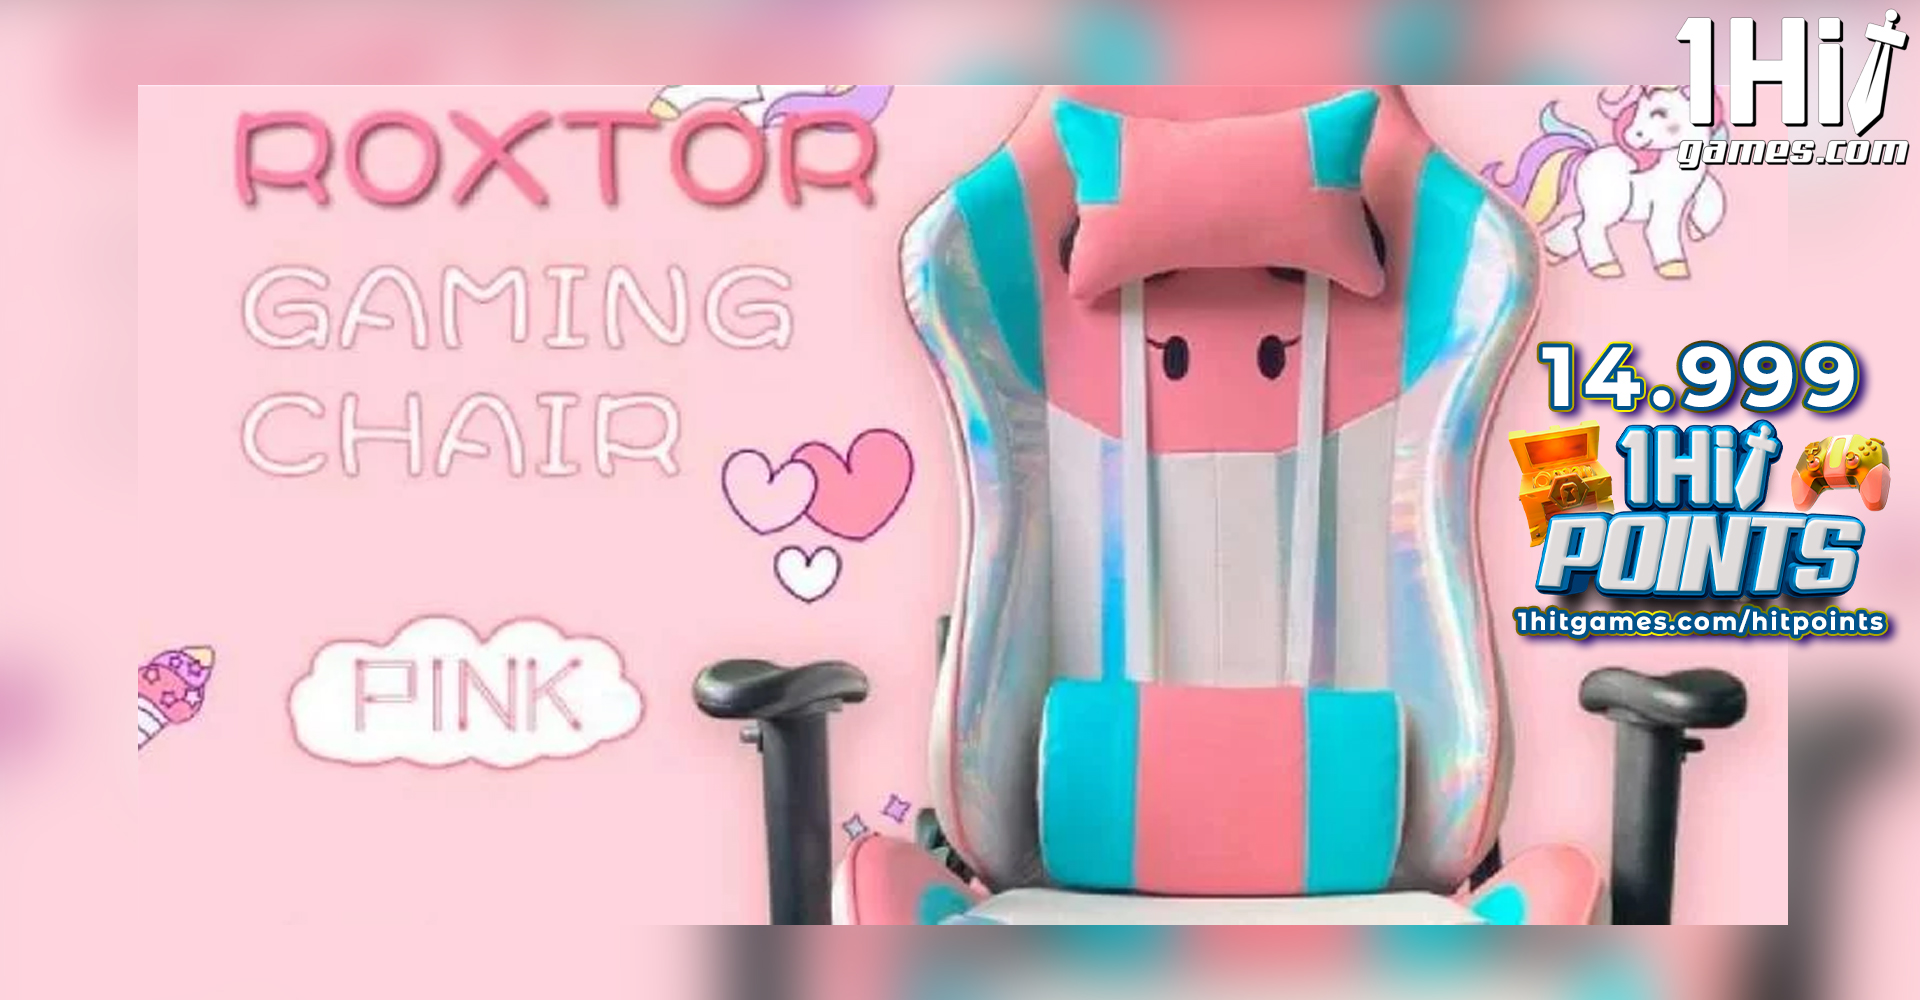 Cadeira Gamer Rosa Roxtor Unicorn